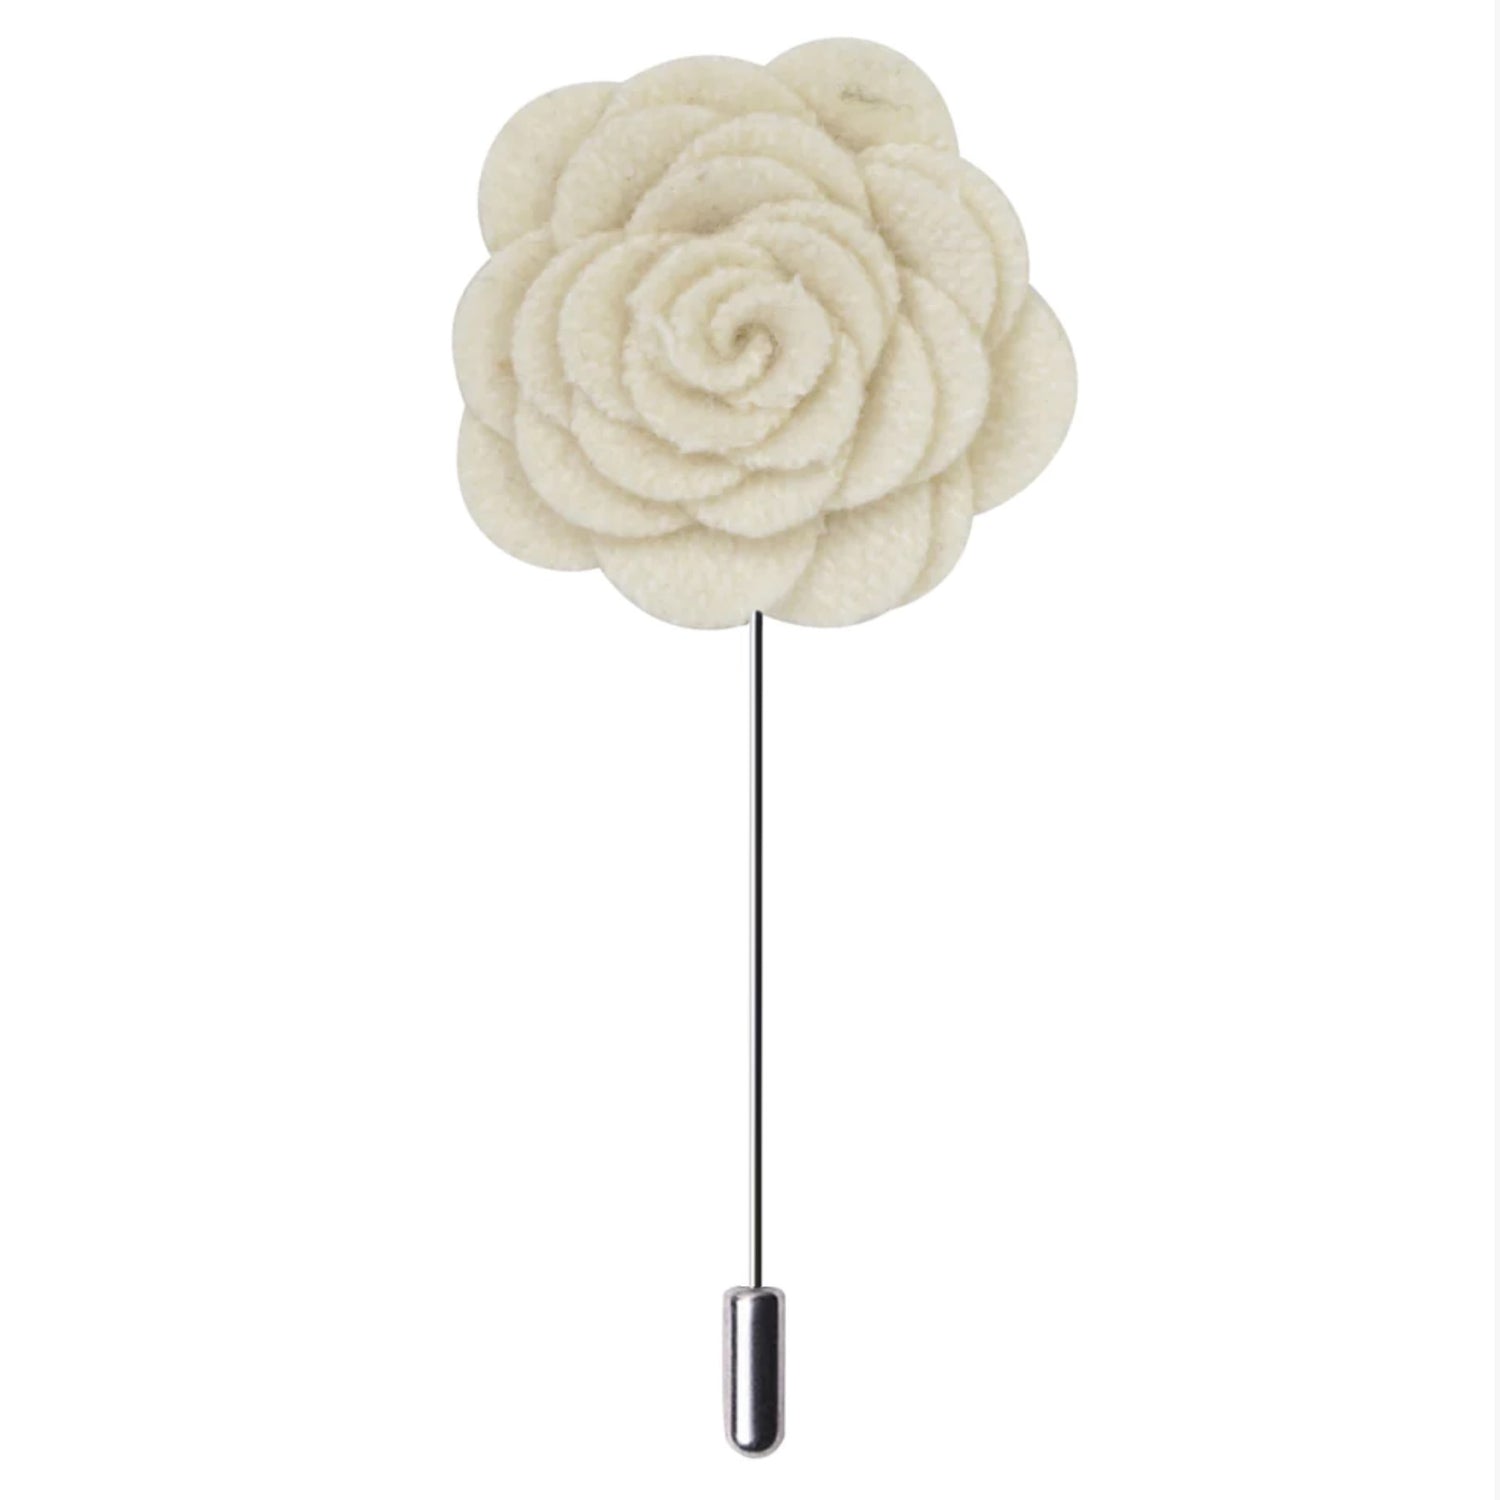 A Solid Cream Wide Petal Flower Shaped Lapel Pin||Cream